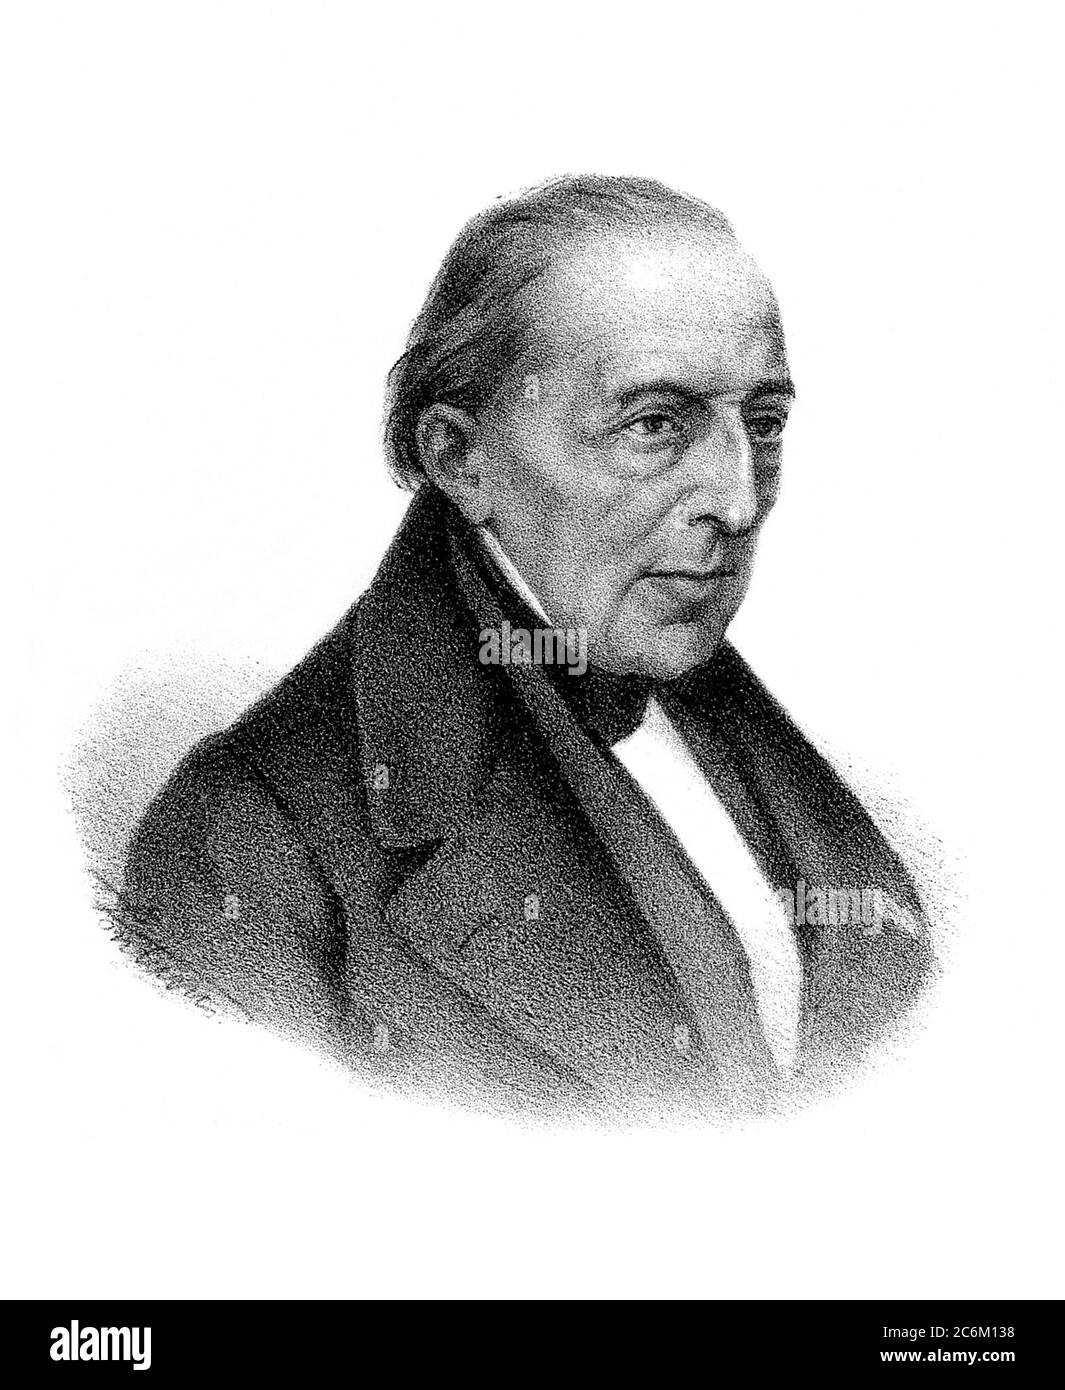 1840 ca , ITALY : Portrait of  italian economist , engineer , mathematician , politician VITTORIO FOSSOMBRONI ( 1754 - 1844 ) . Portrait engraver by Fontana , pubblished in XIX century . - INGEGNERE - INGEGNERIA - POLITICO - POLITICA - POLITIC - ECONOMISTA - ECONOMY - ECONOMIA  - MATEMATICO - MATEMATICA - foto storiche - foto storica - portrait - ritratto - ITALIA - illustrazione - illustration - engraving - incisione ---  Archivio GBB Stock Photo